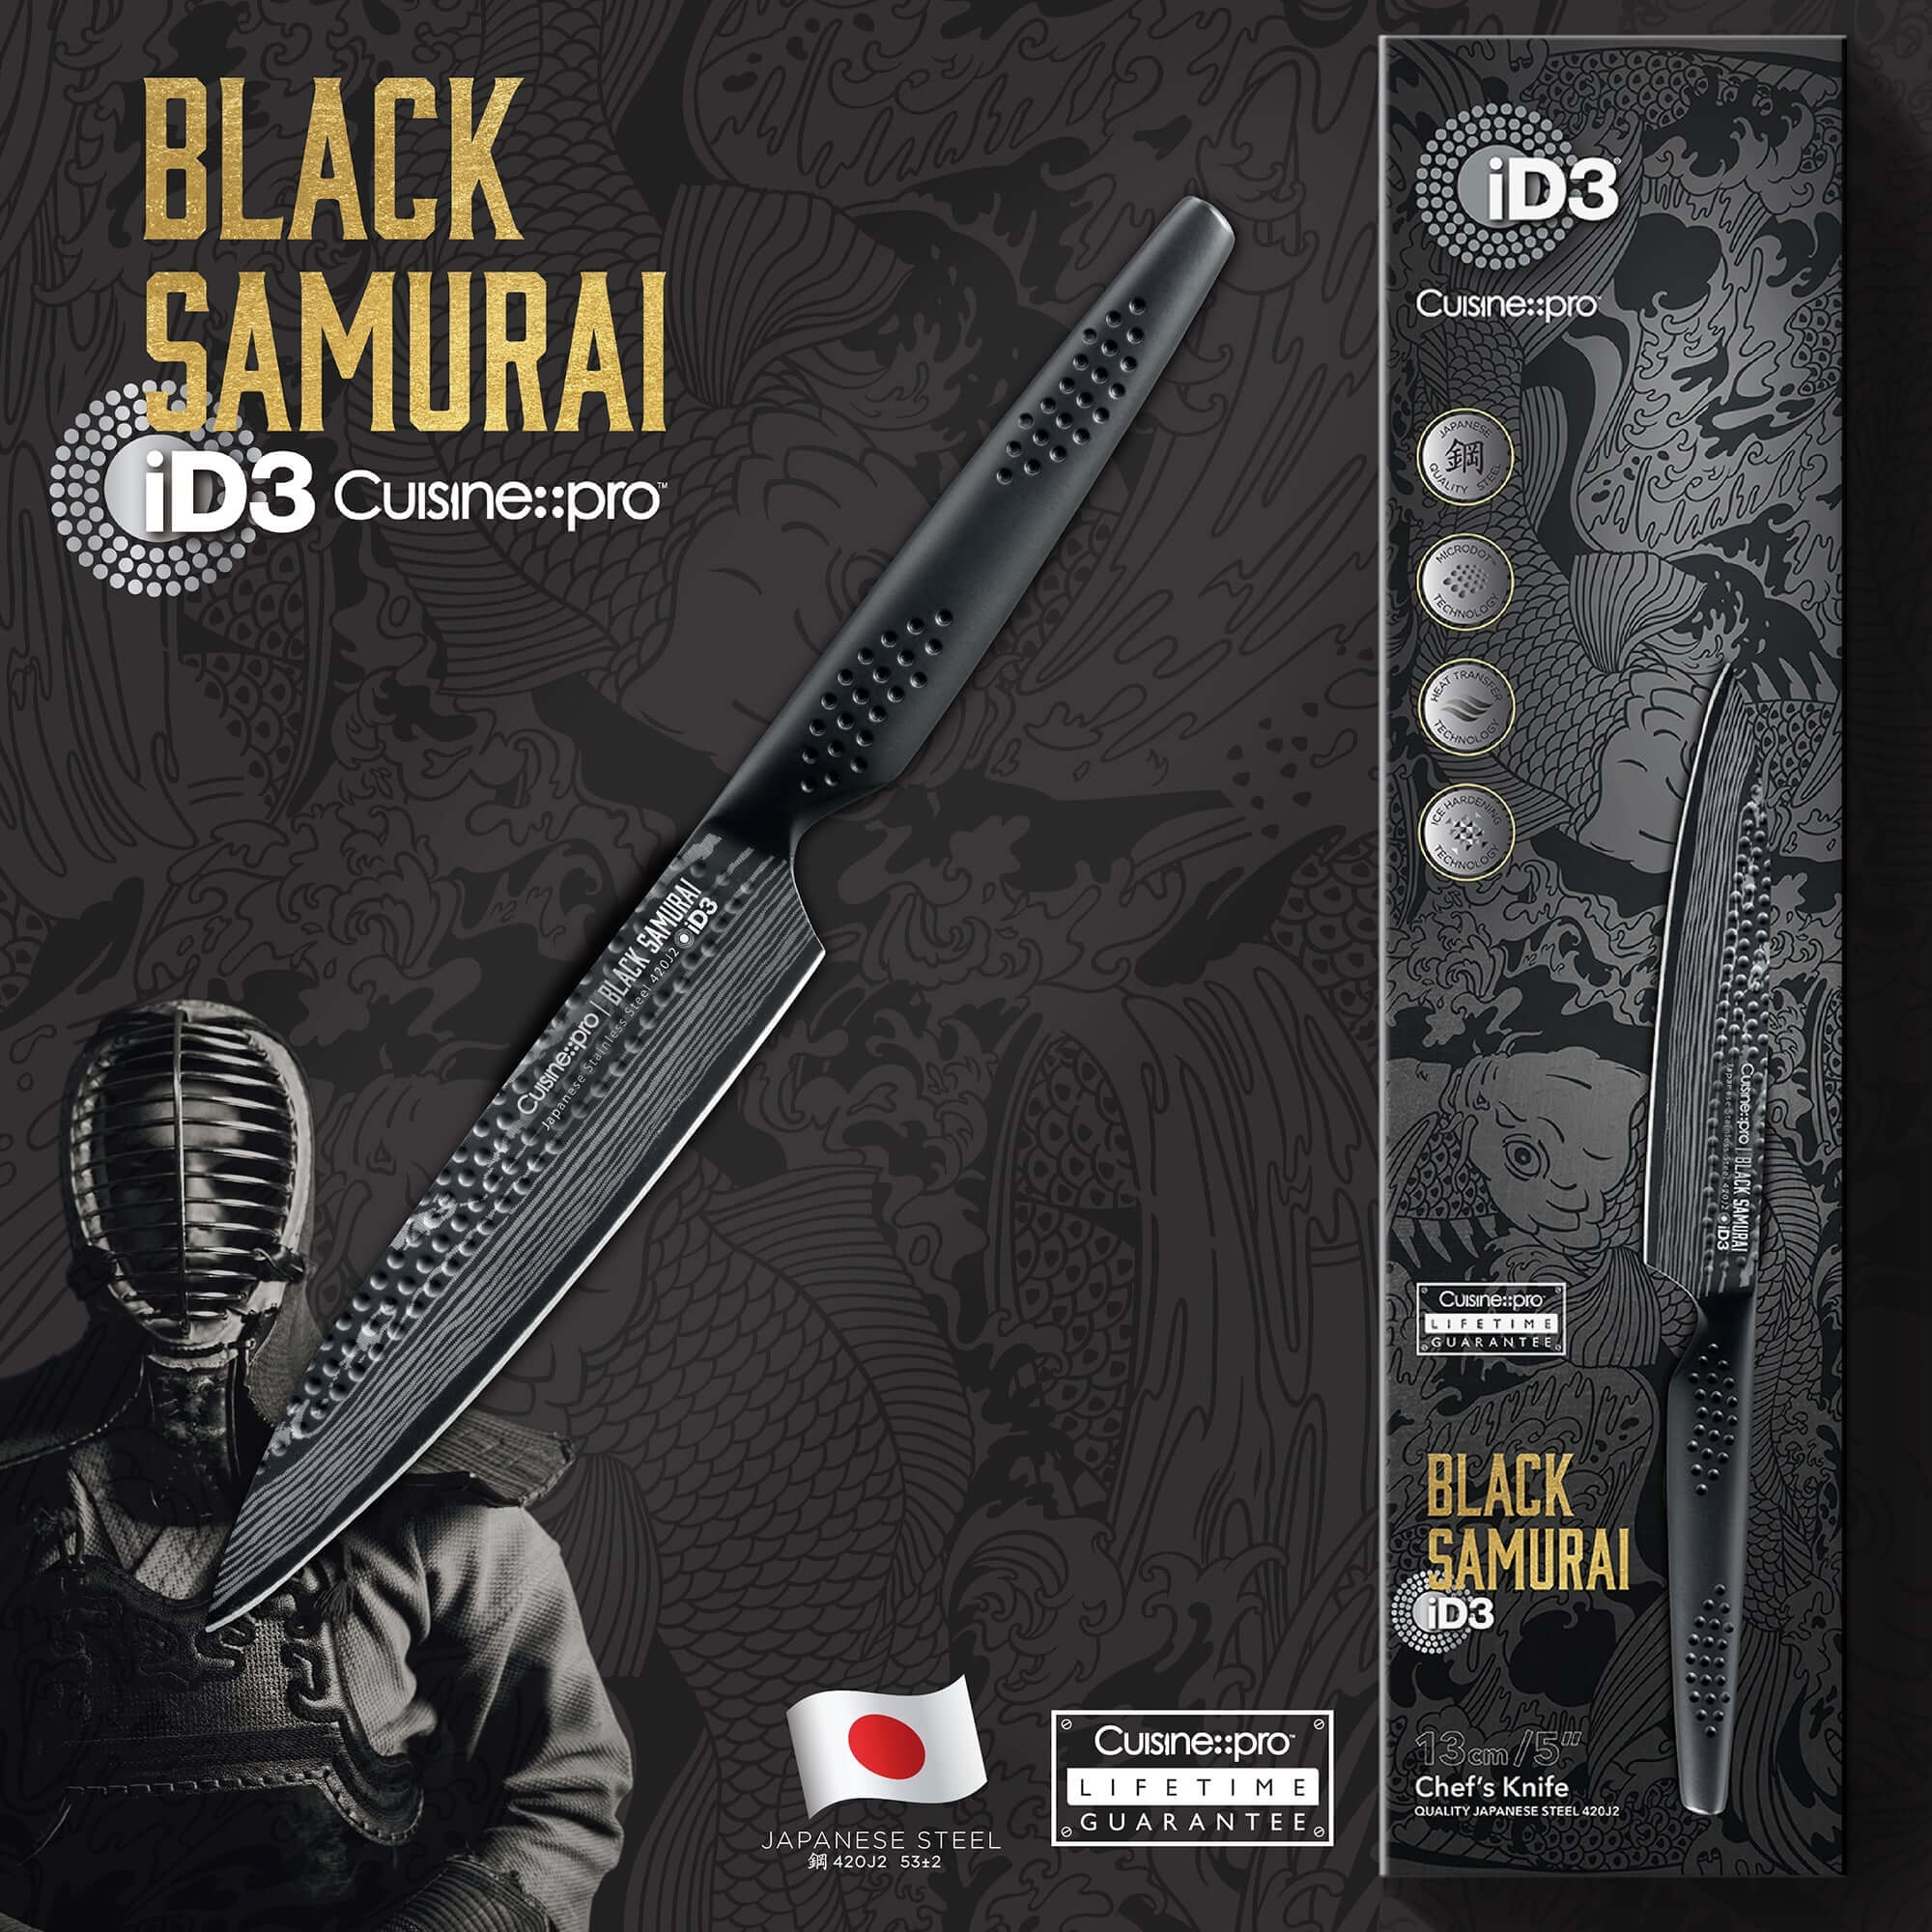 Cuisine::pro® iD3® BLACK SAMURAI™ Chefs Knife 13cm 5in-1034433